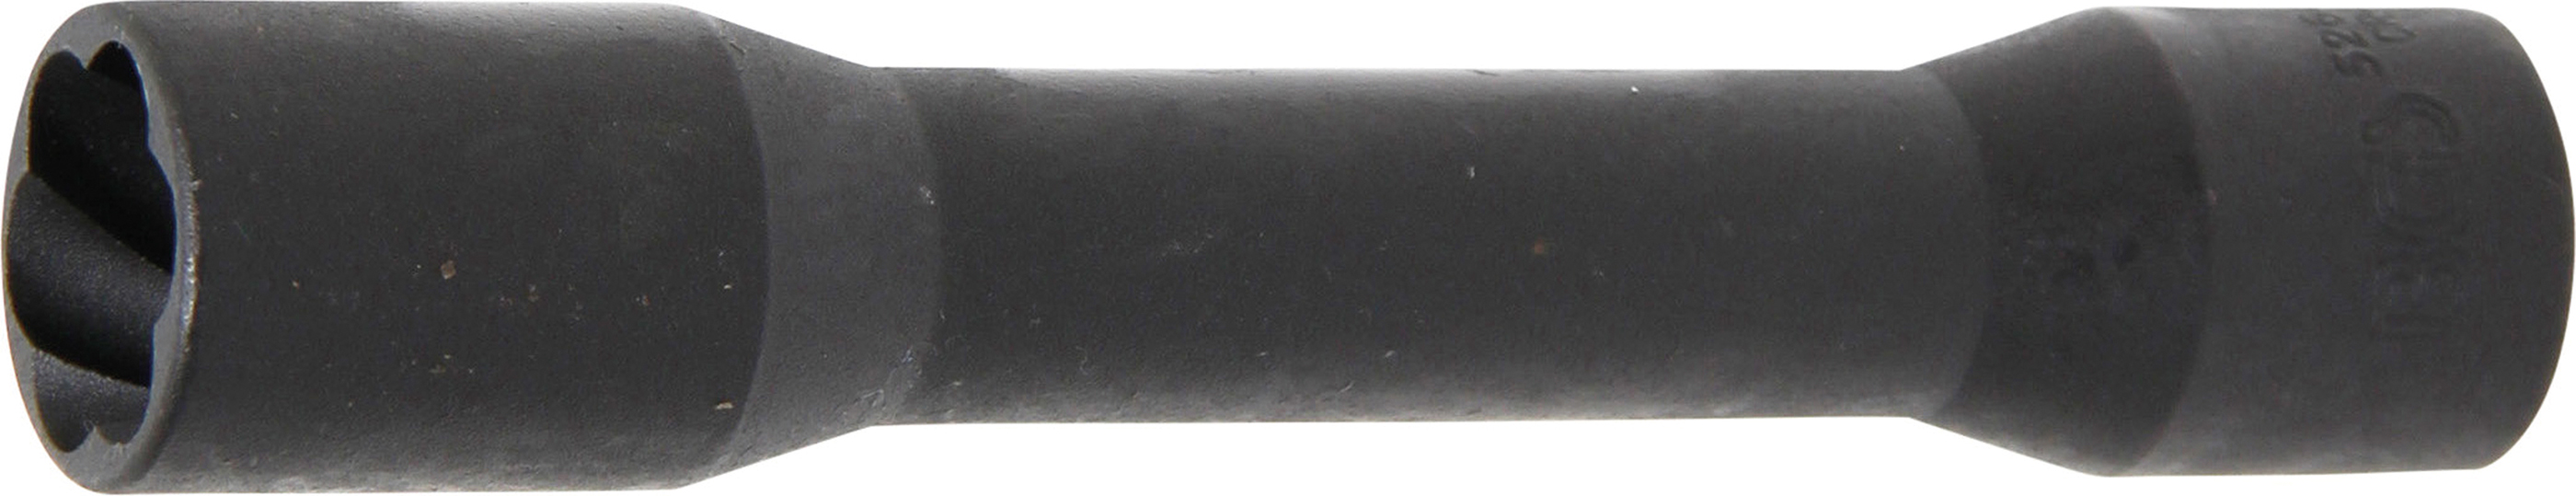 BGS 5264-19  Tubulara speciala adanca pentru suruburi deteriorate,1/2",19 mm